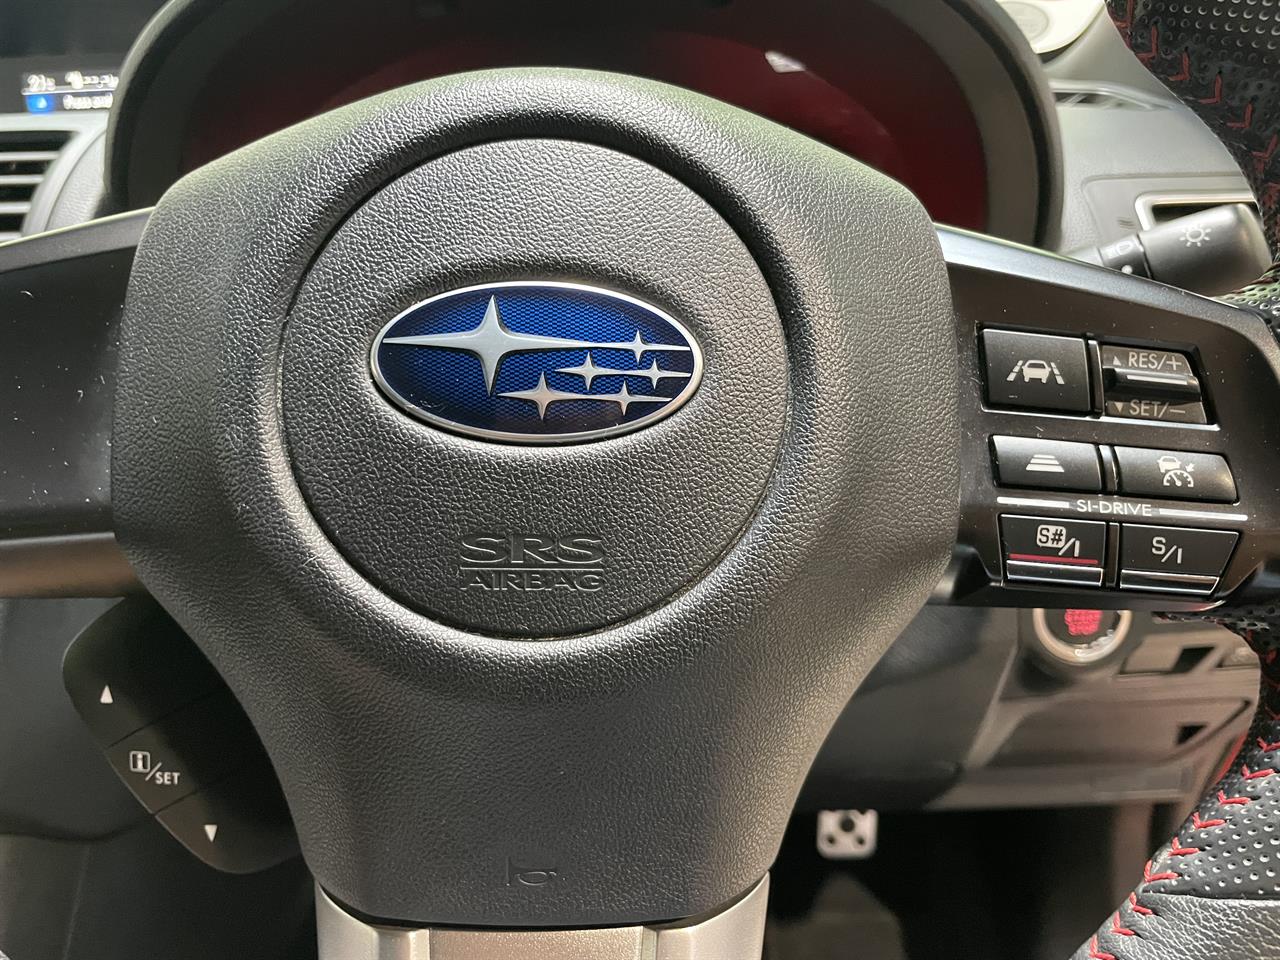 2014 Subaru wrx